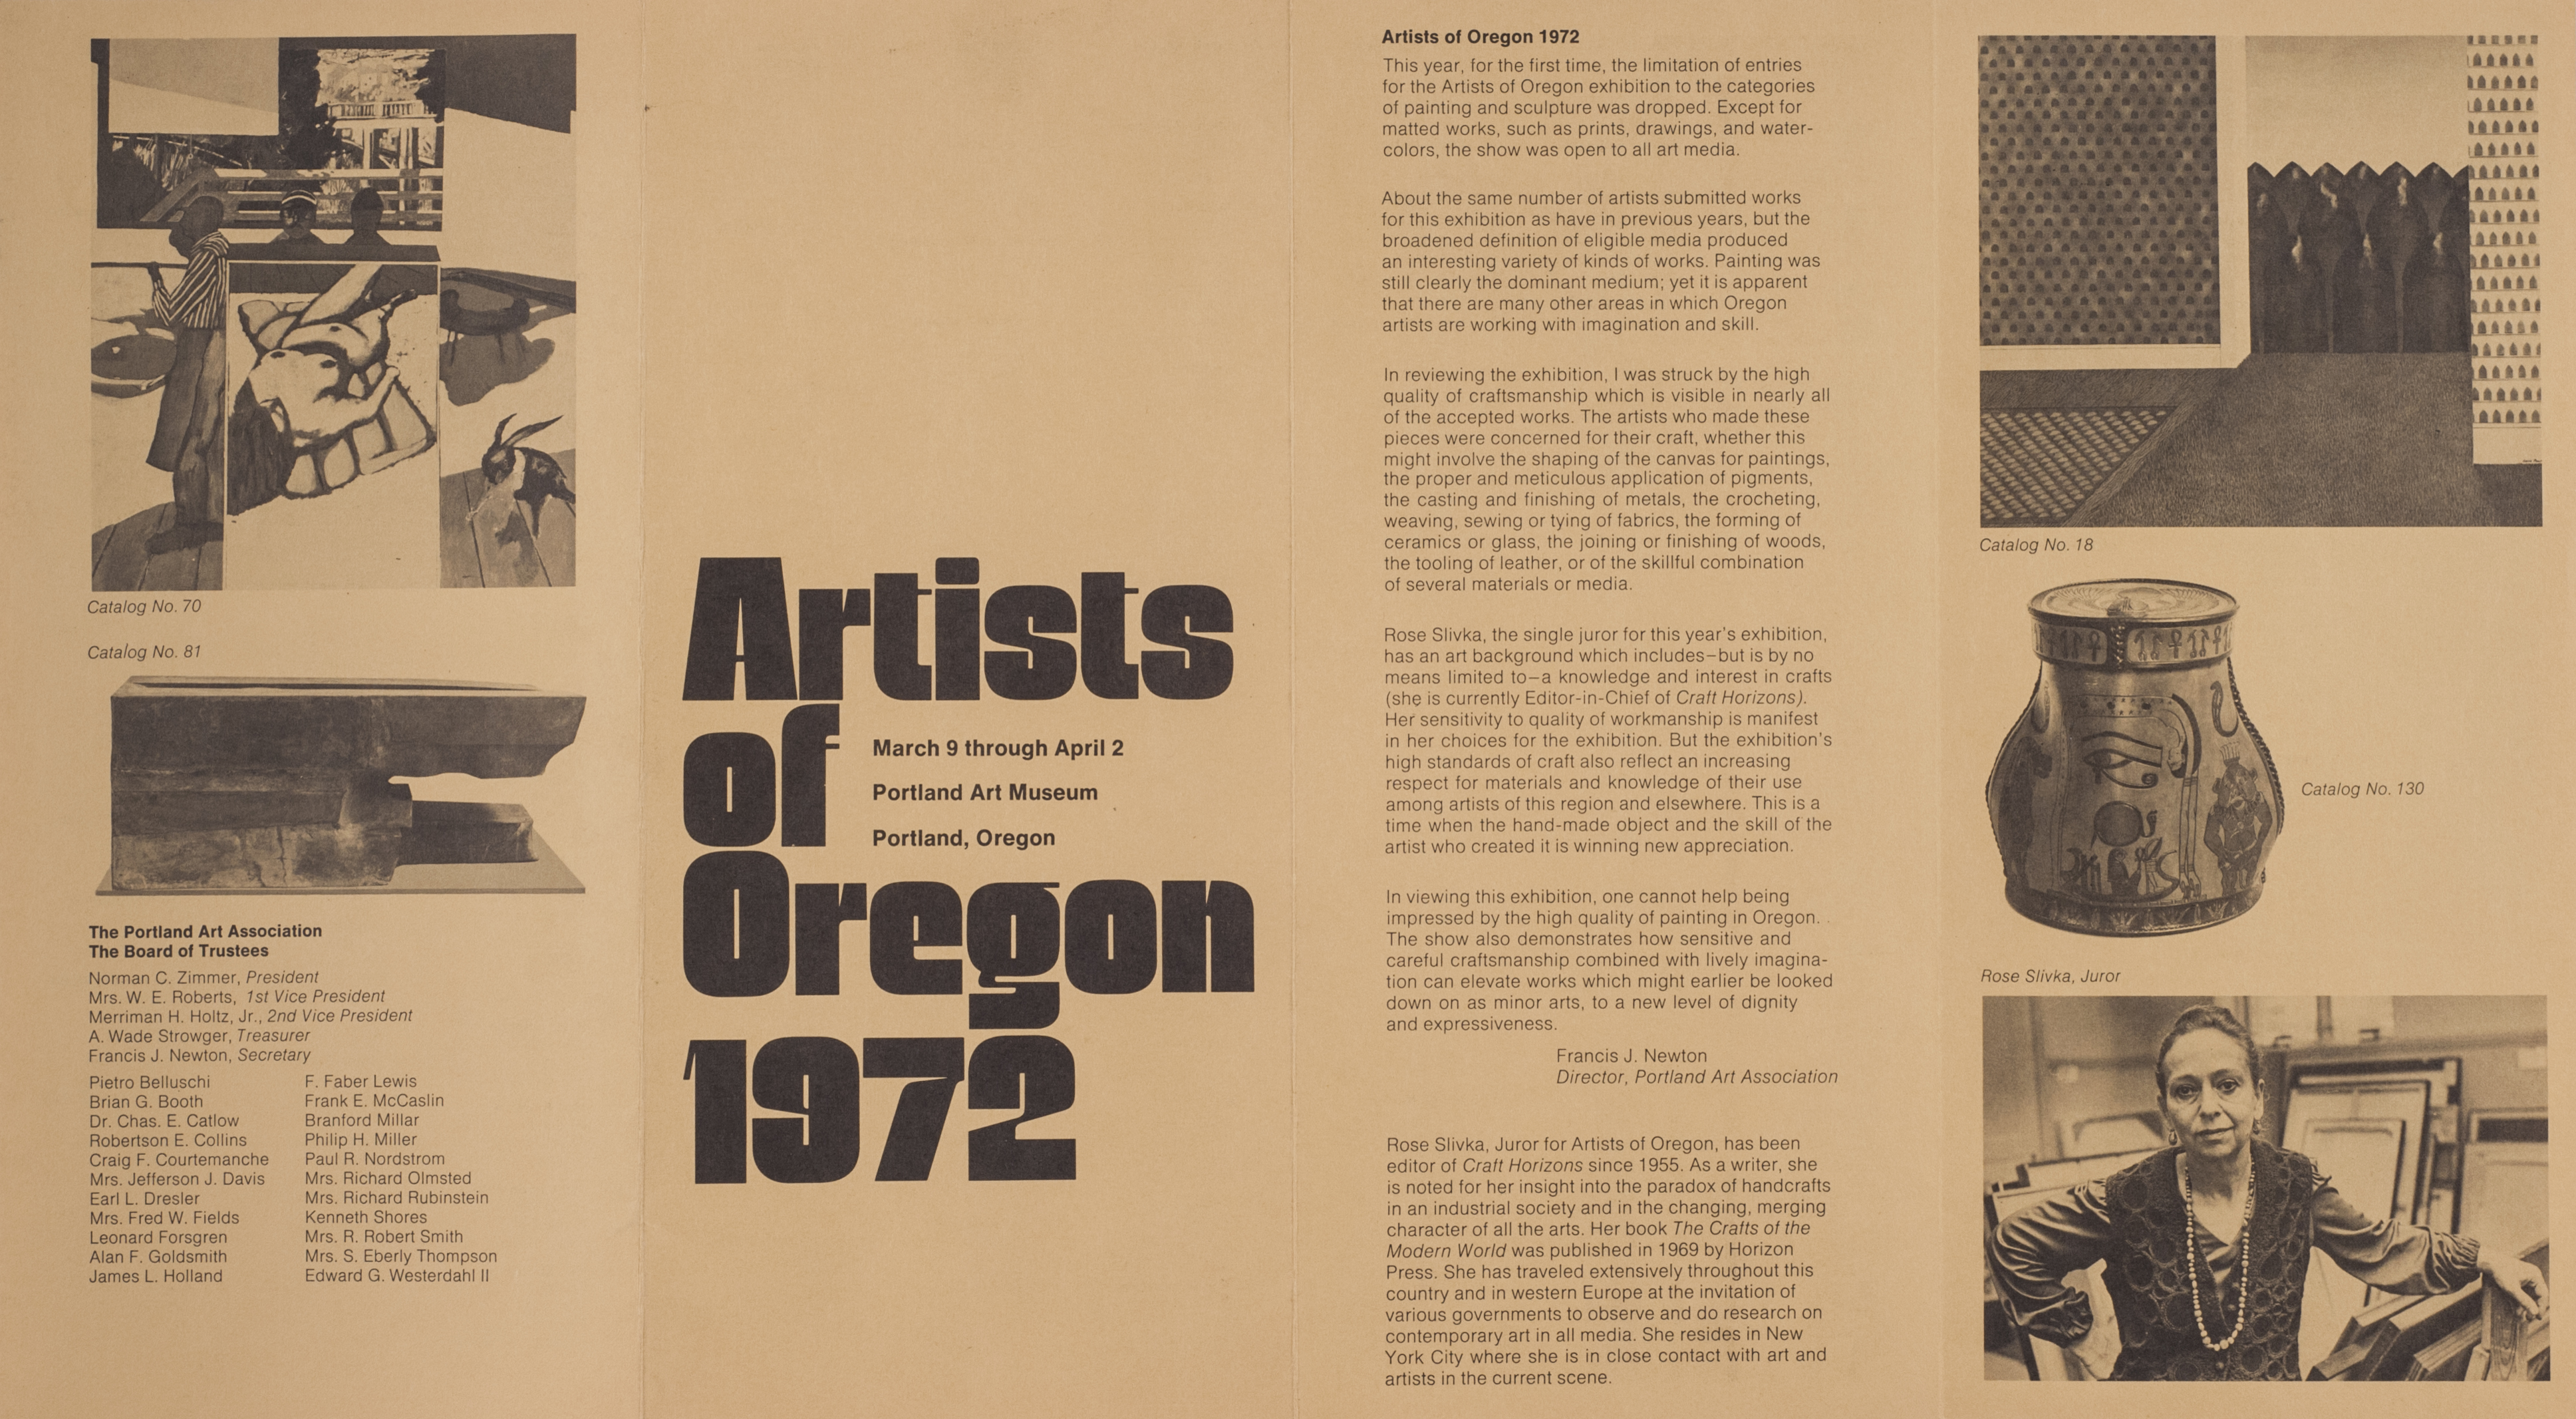 Artist of Oregon 1972 exhibition brochure front